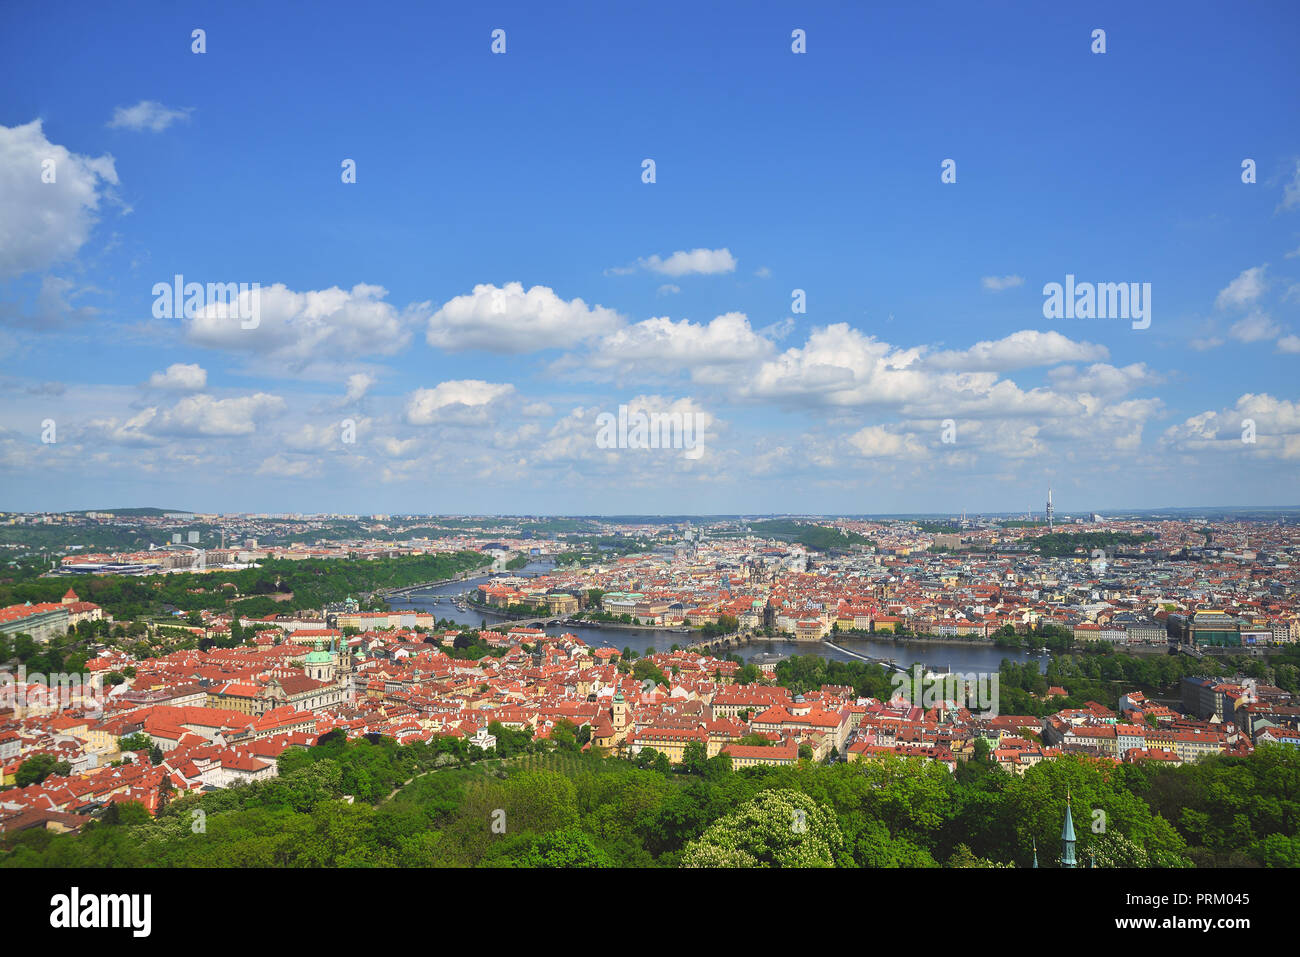 Città vecchia di Praga Foto Stock